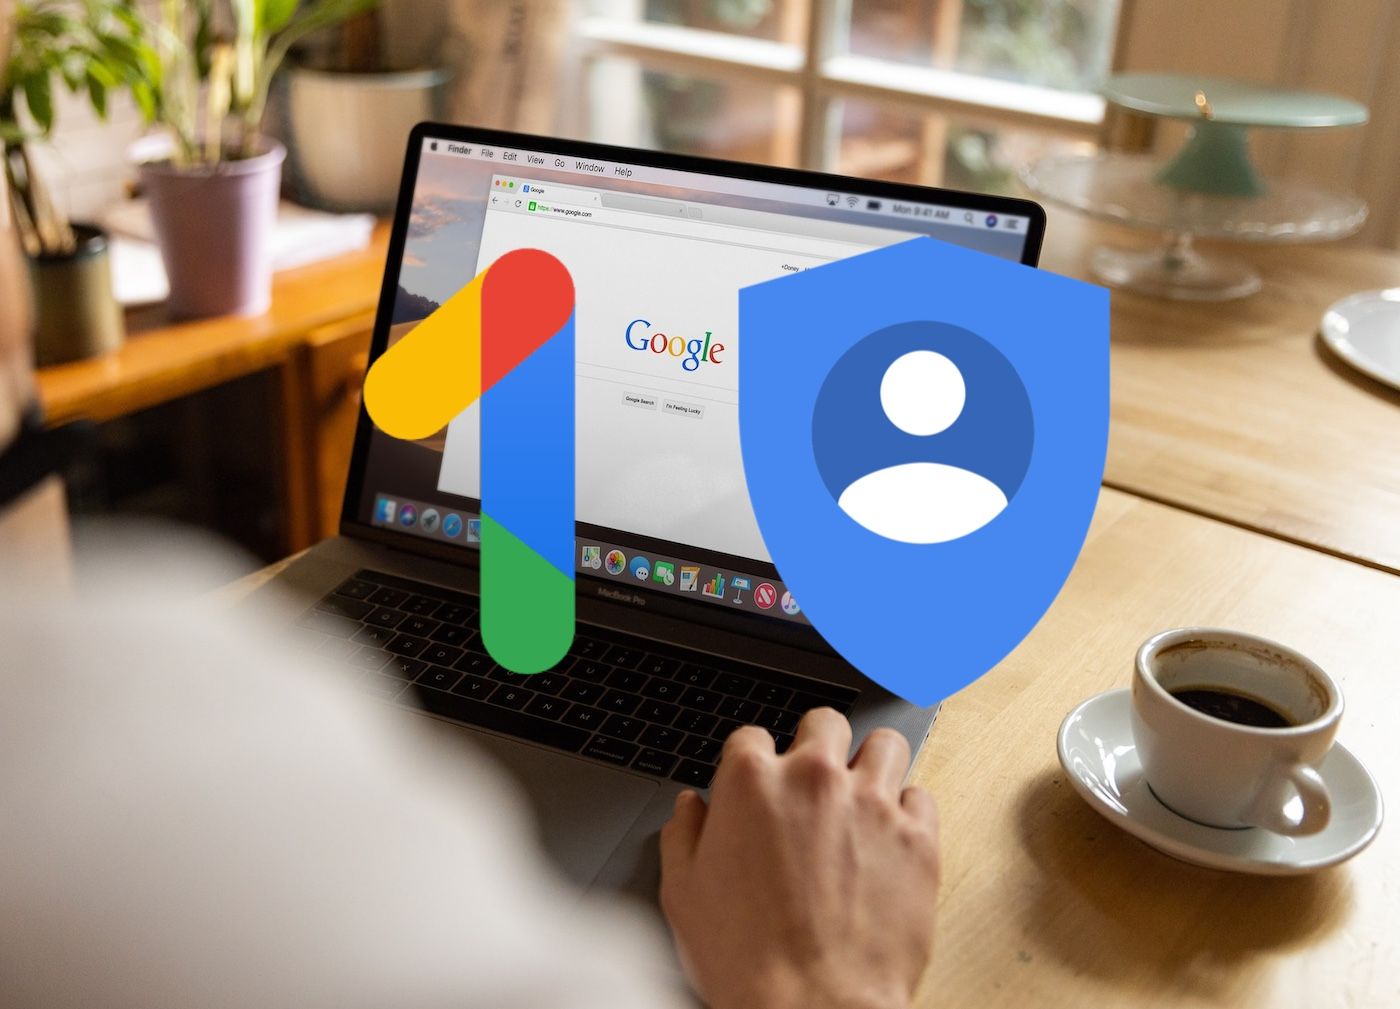 Google account and One logo overlayed on laptop hero image